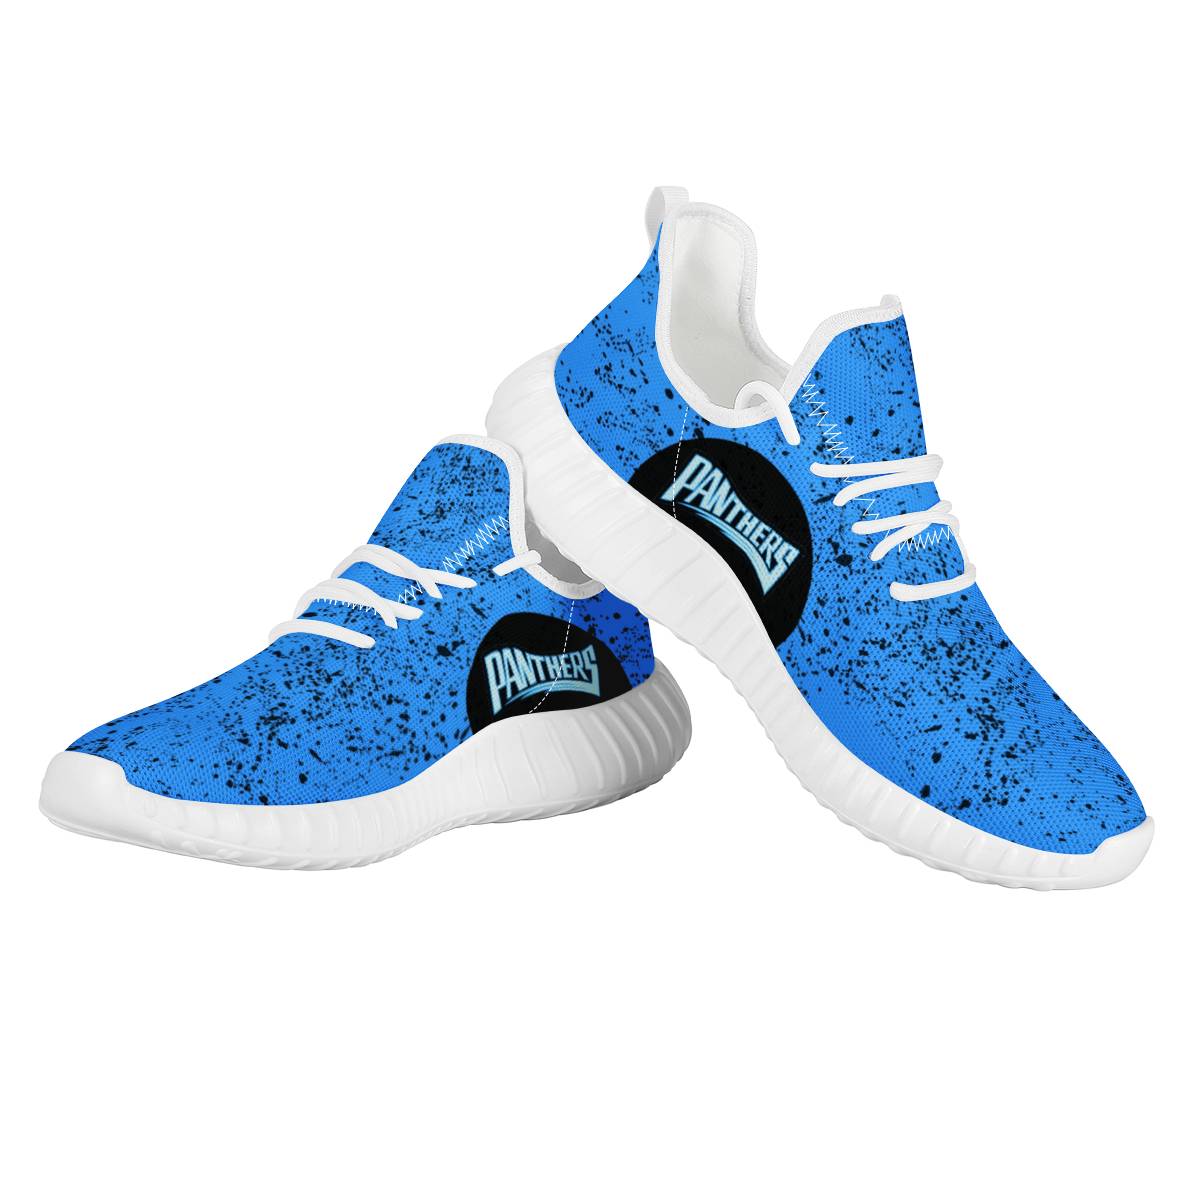 Women's Carolina Panthers Mesh Knit Sneakers/Shoes 008